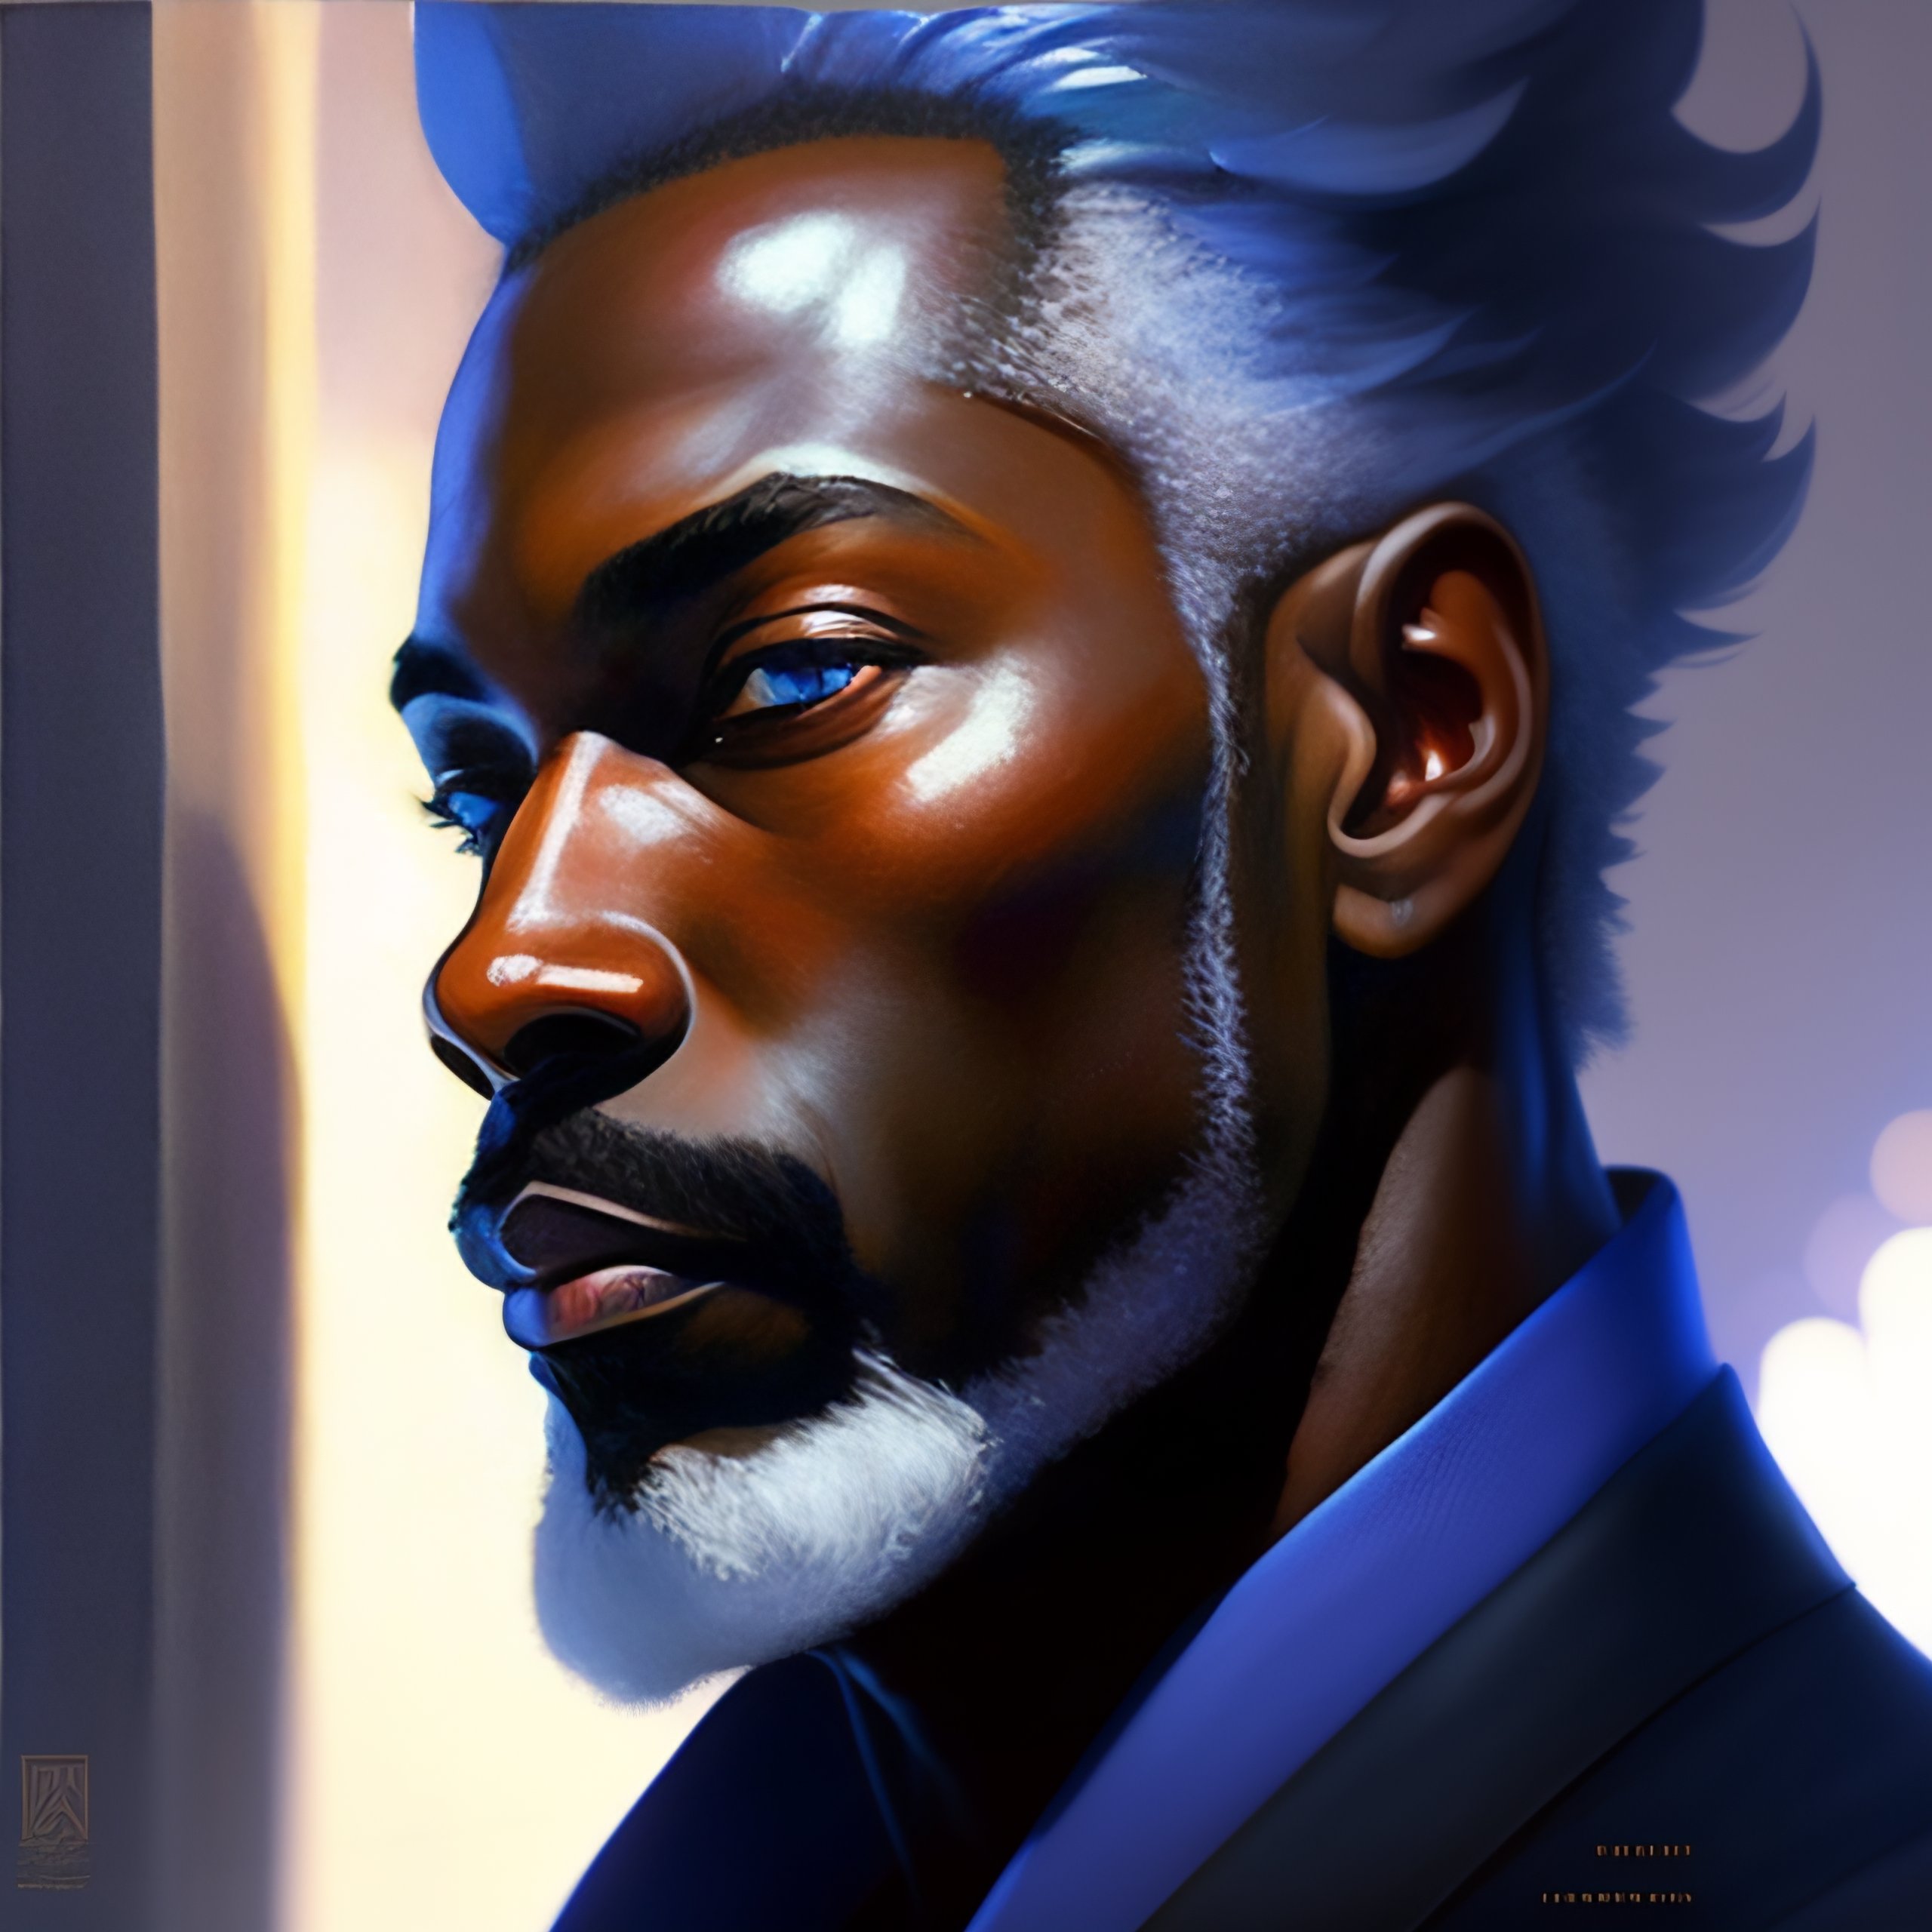 black man with blues eyes by kungfauxboi on DeviantArt